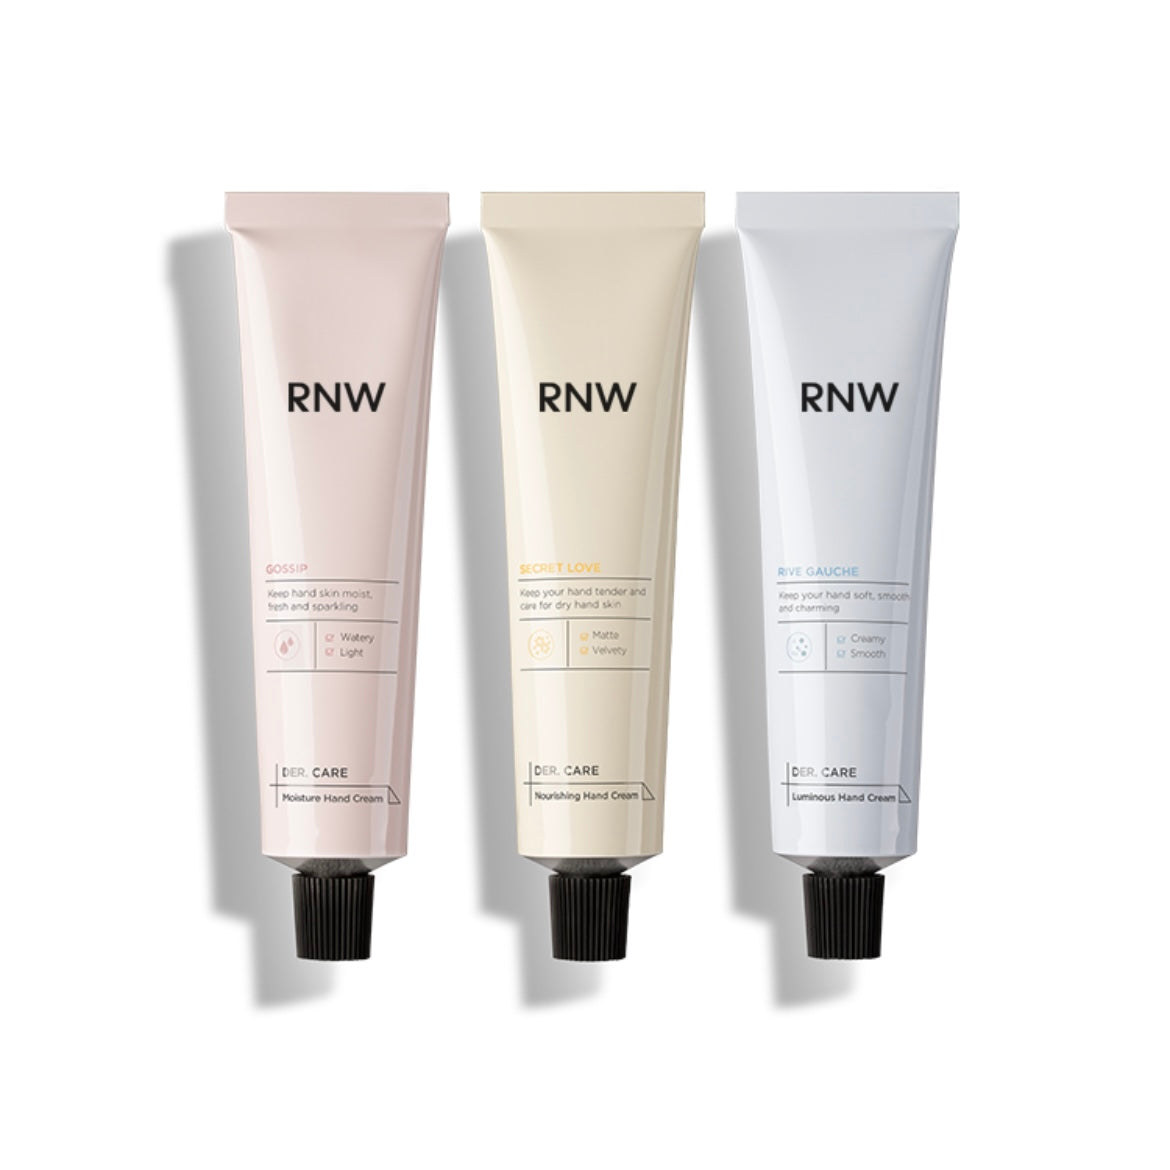 RNW Perfumed Essence Hand Cream 50ML 如薇香氛精华护手霜